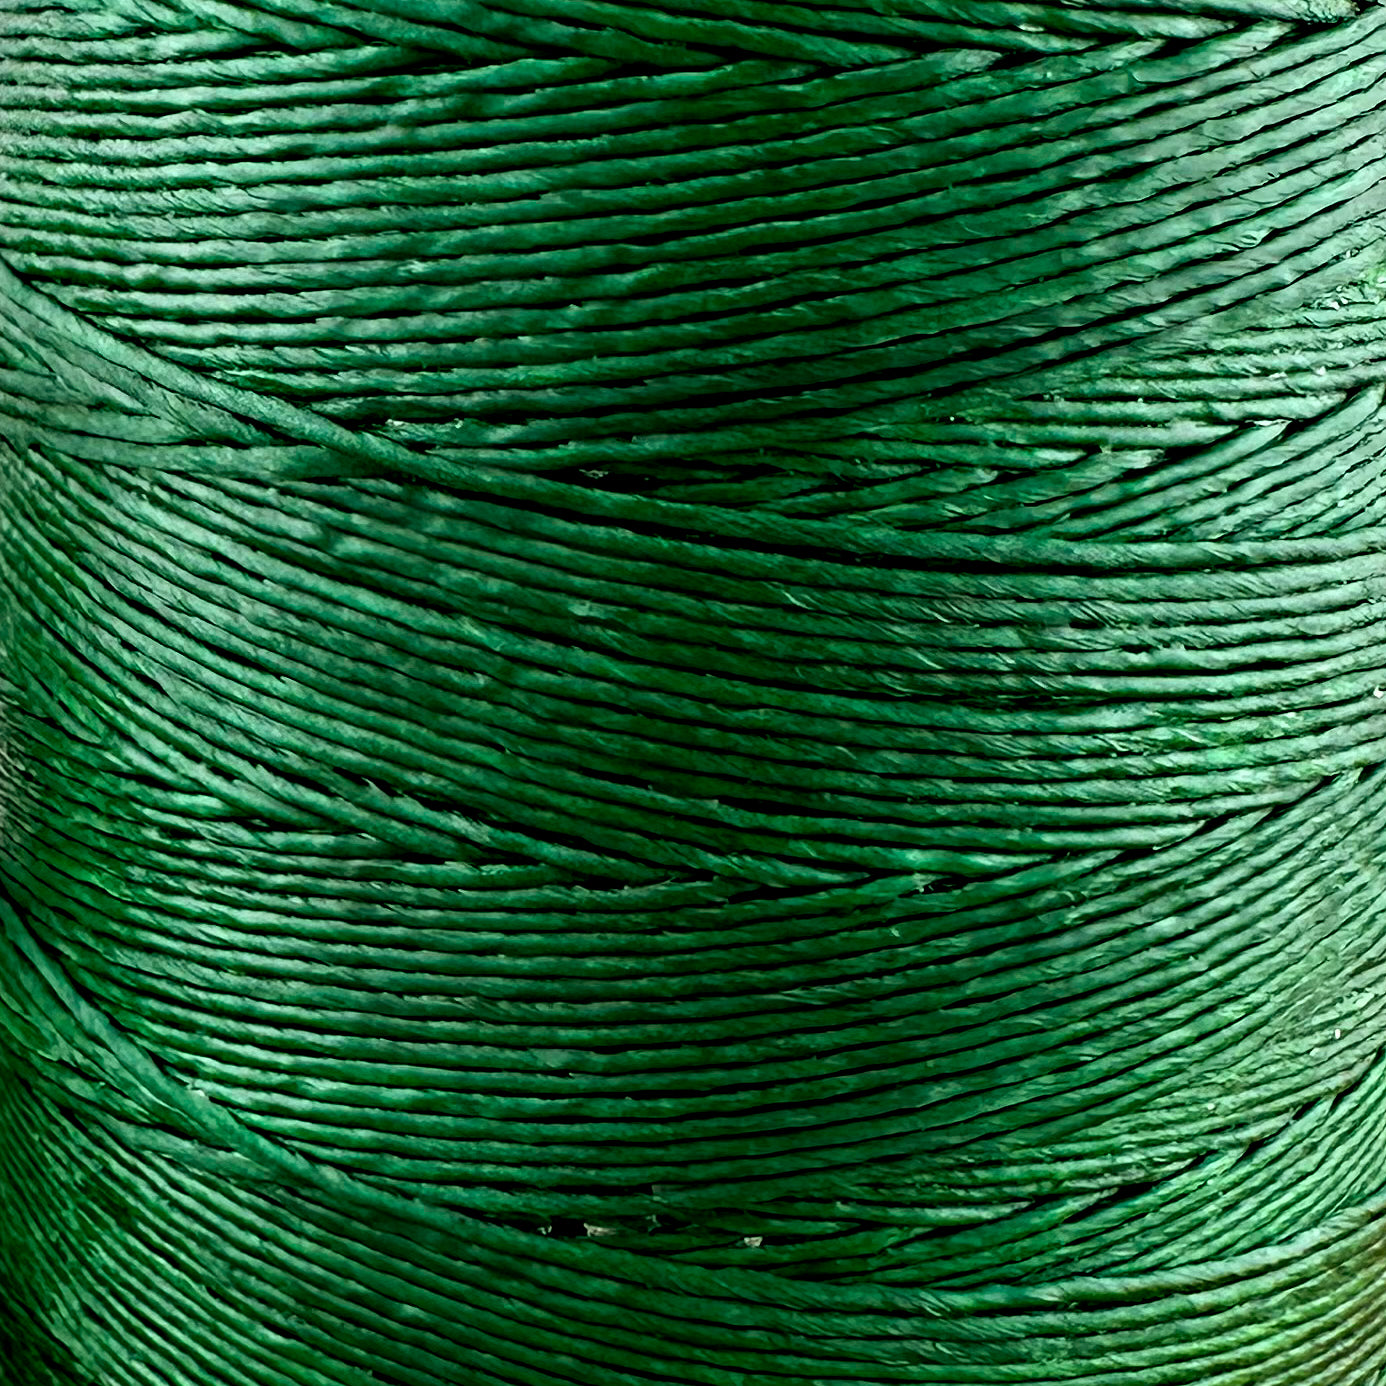 600 Meter Macrame Cord Spool - Dark Green